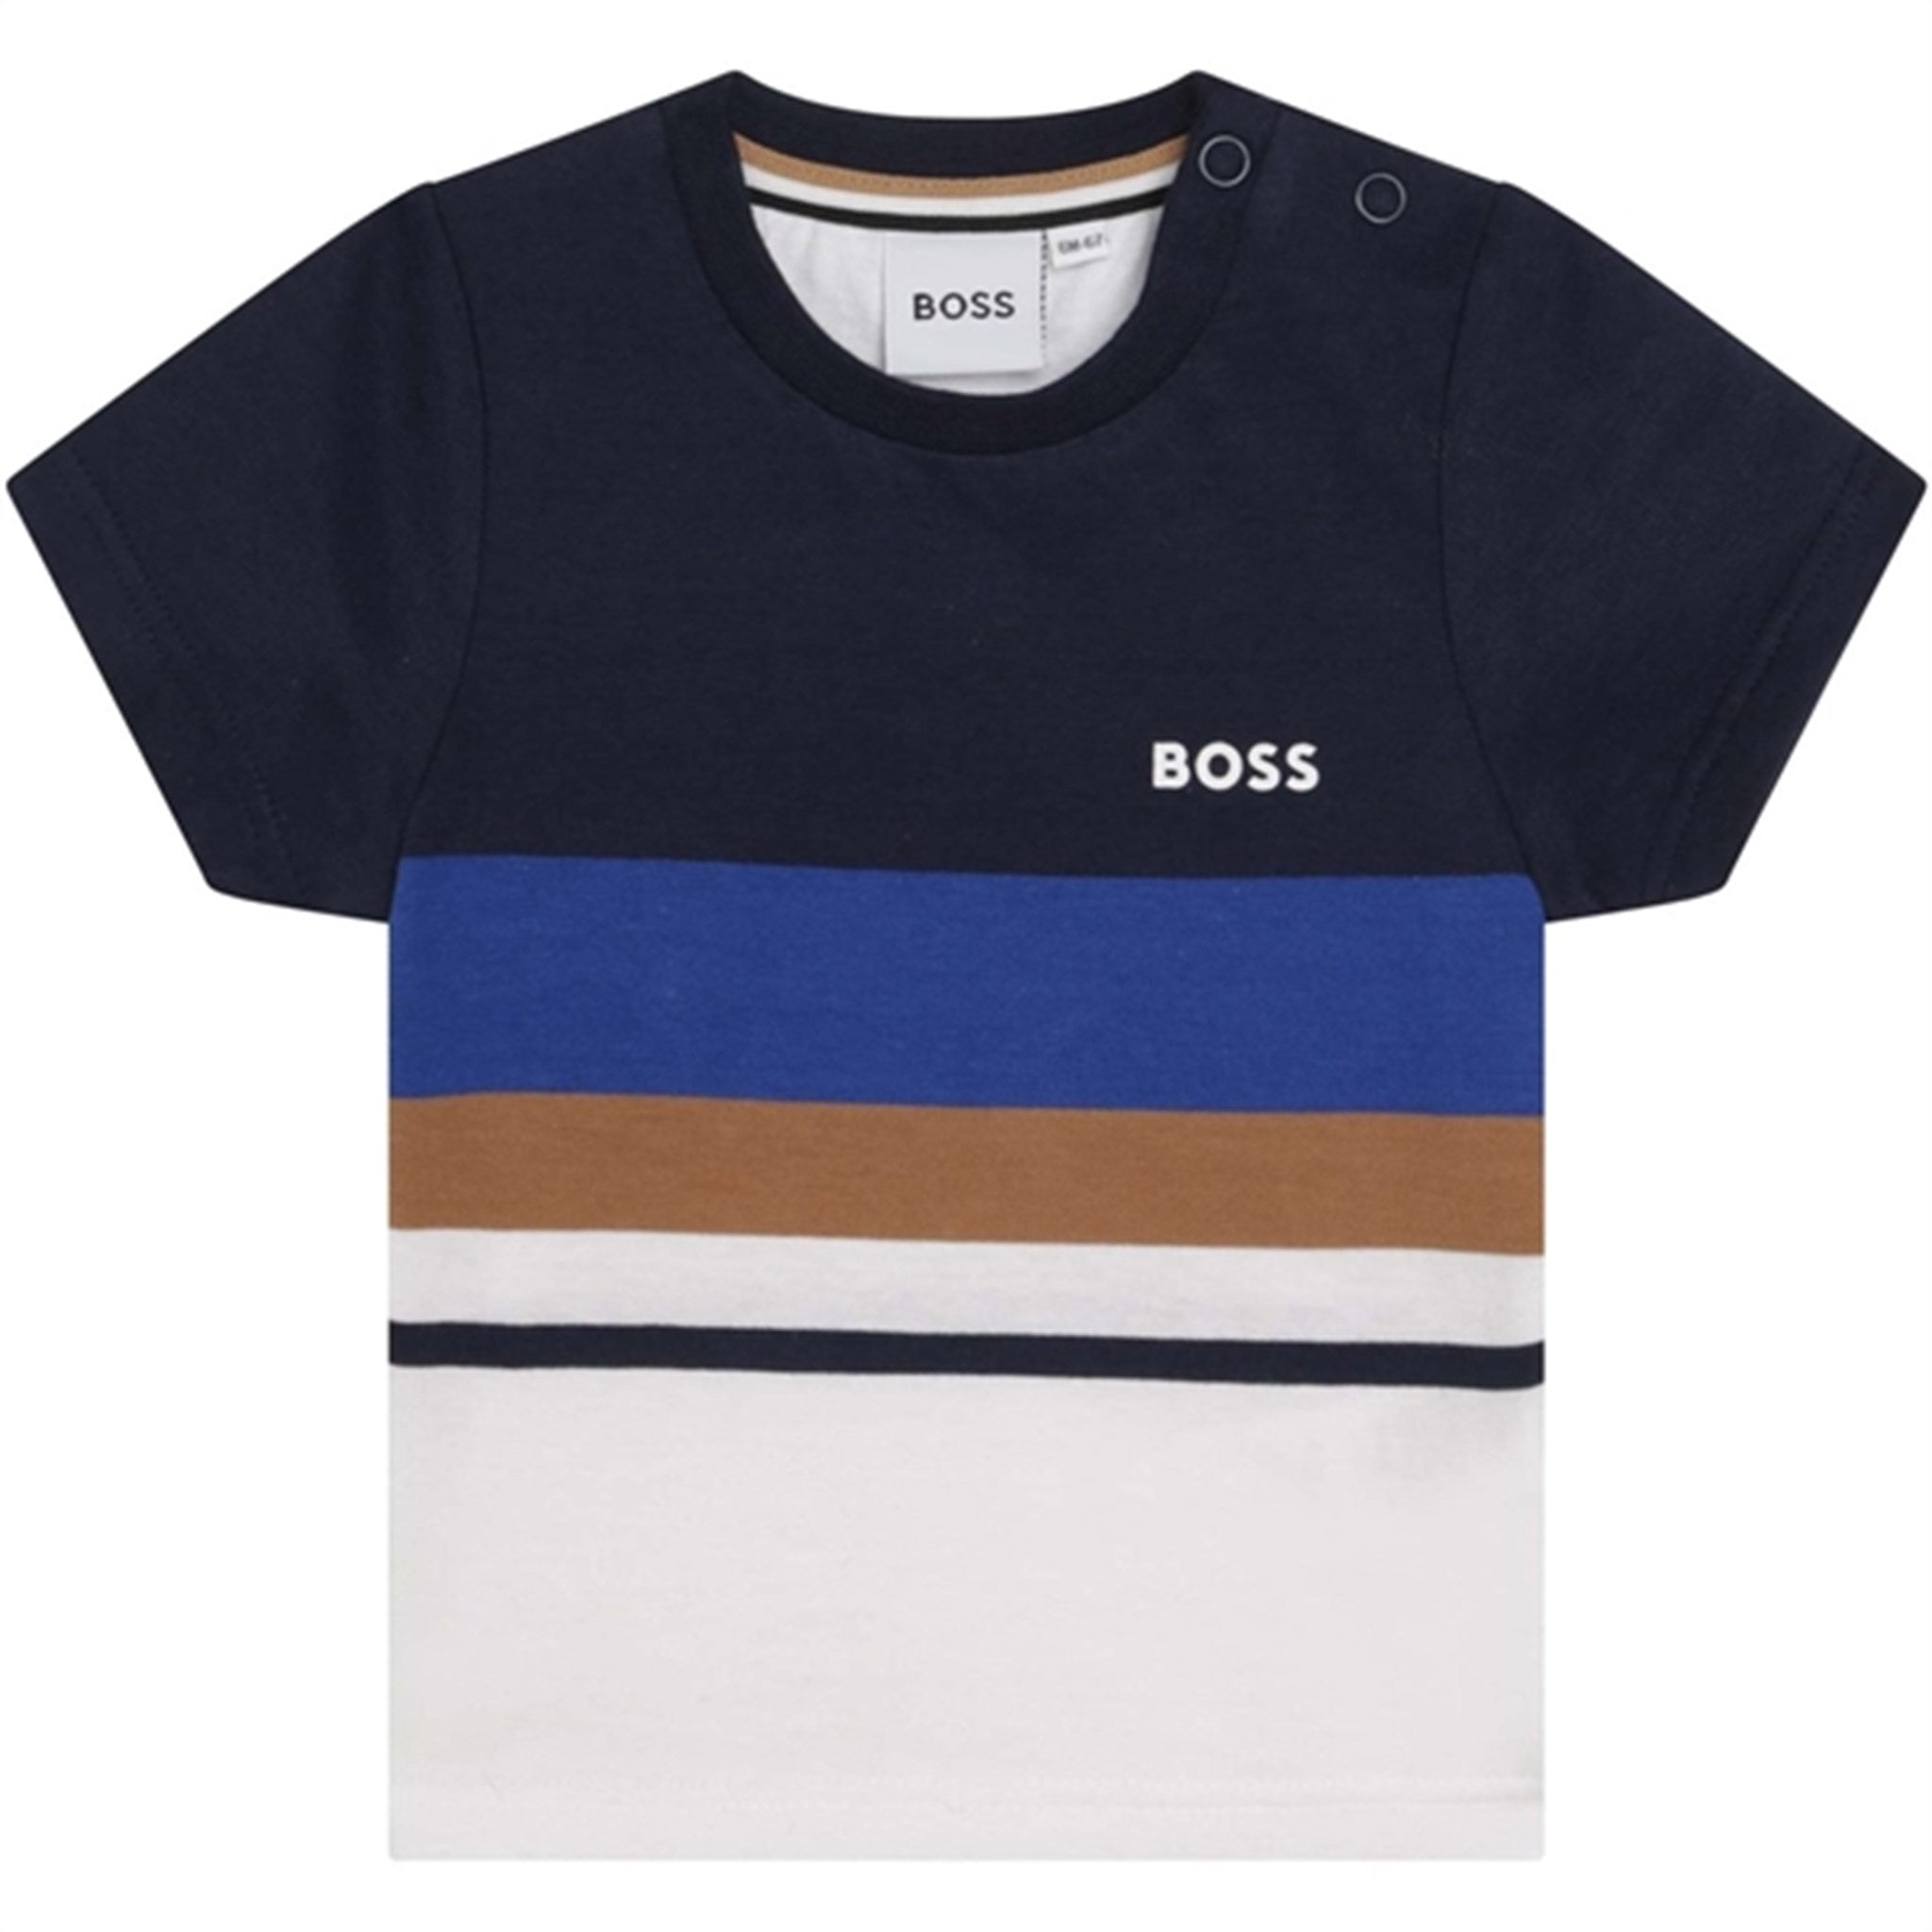 Hugo Boss Bebis T-shirt Navy